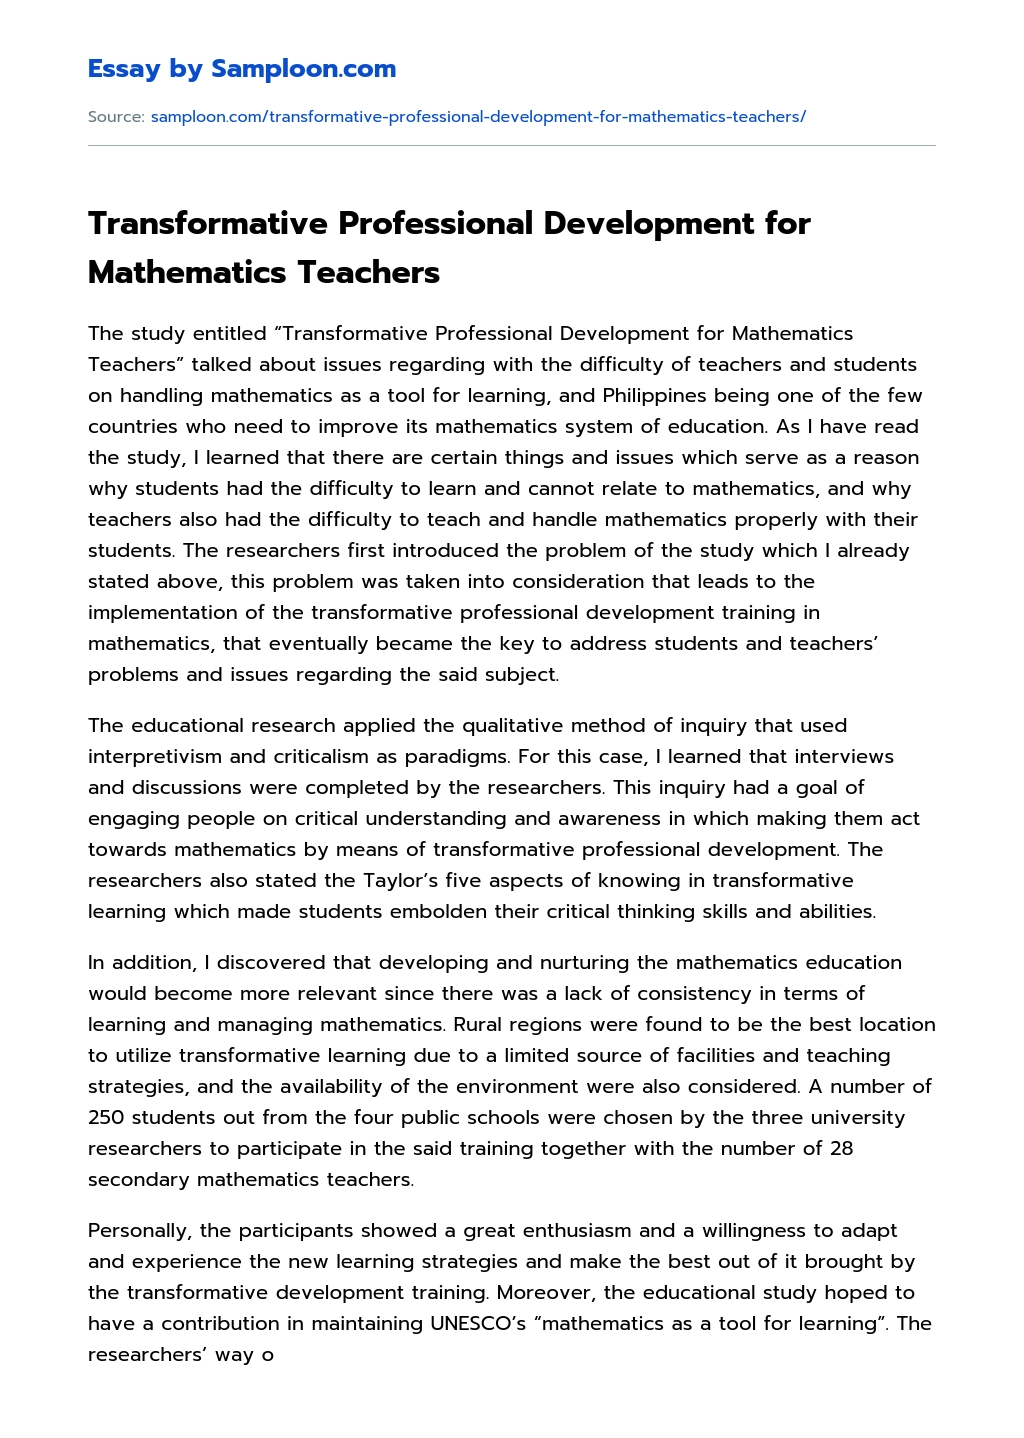 Transformative Professional Development for Mathematics Teachers essay